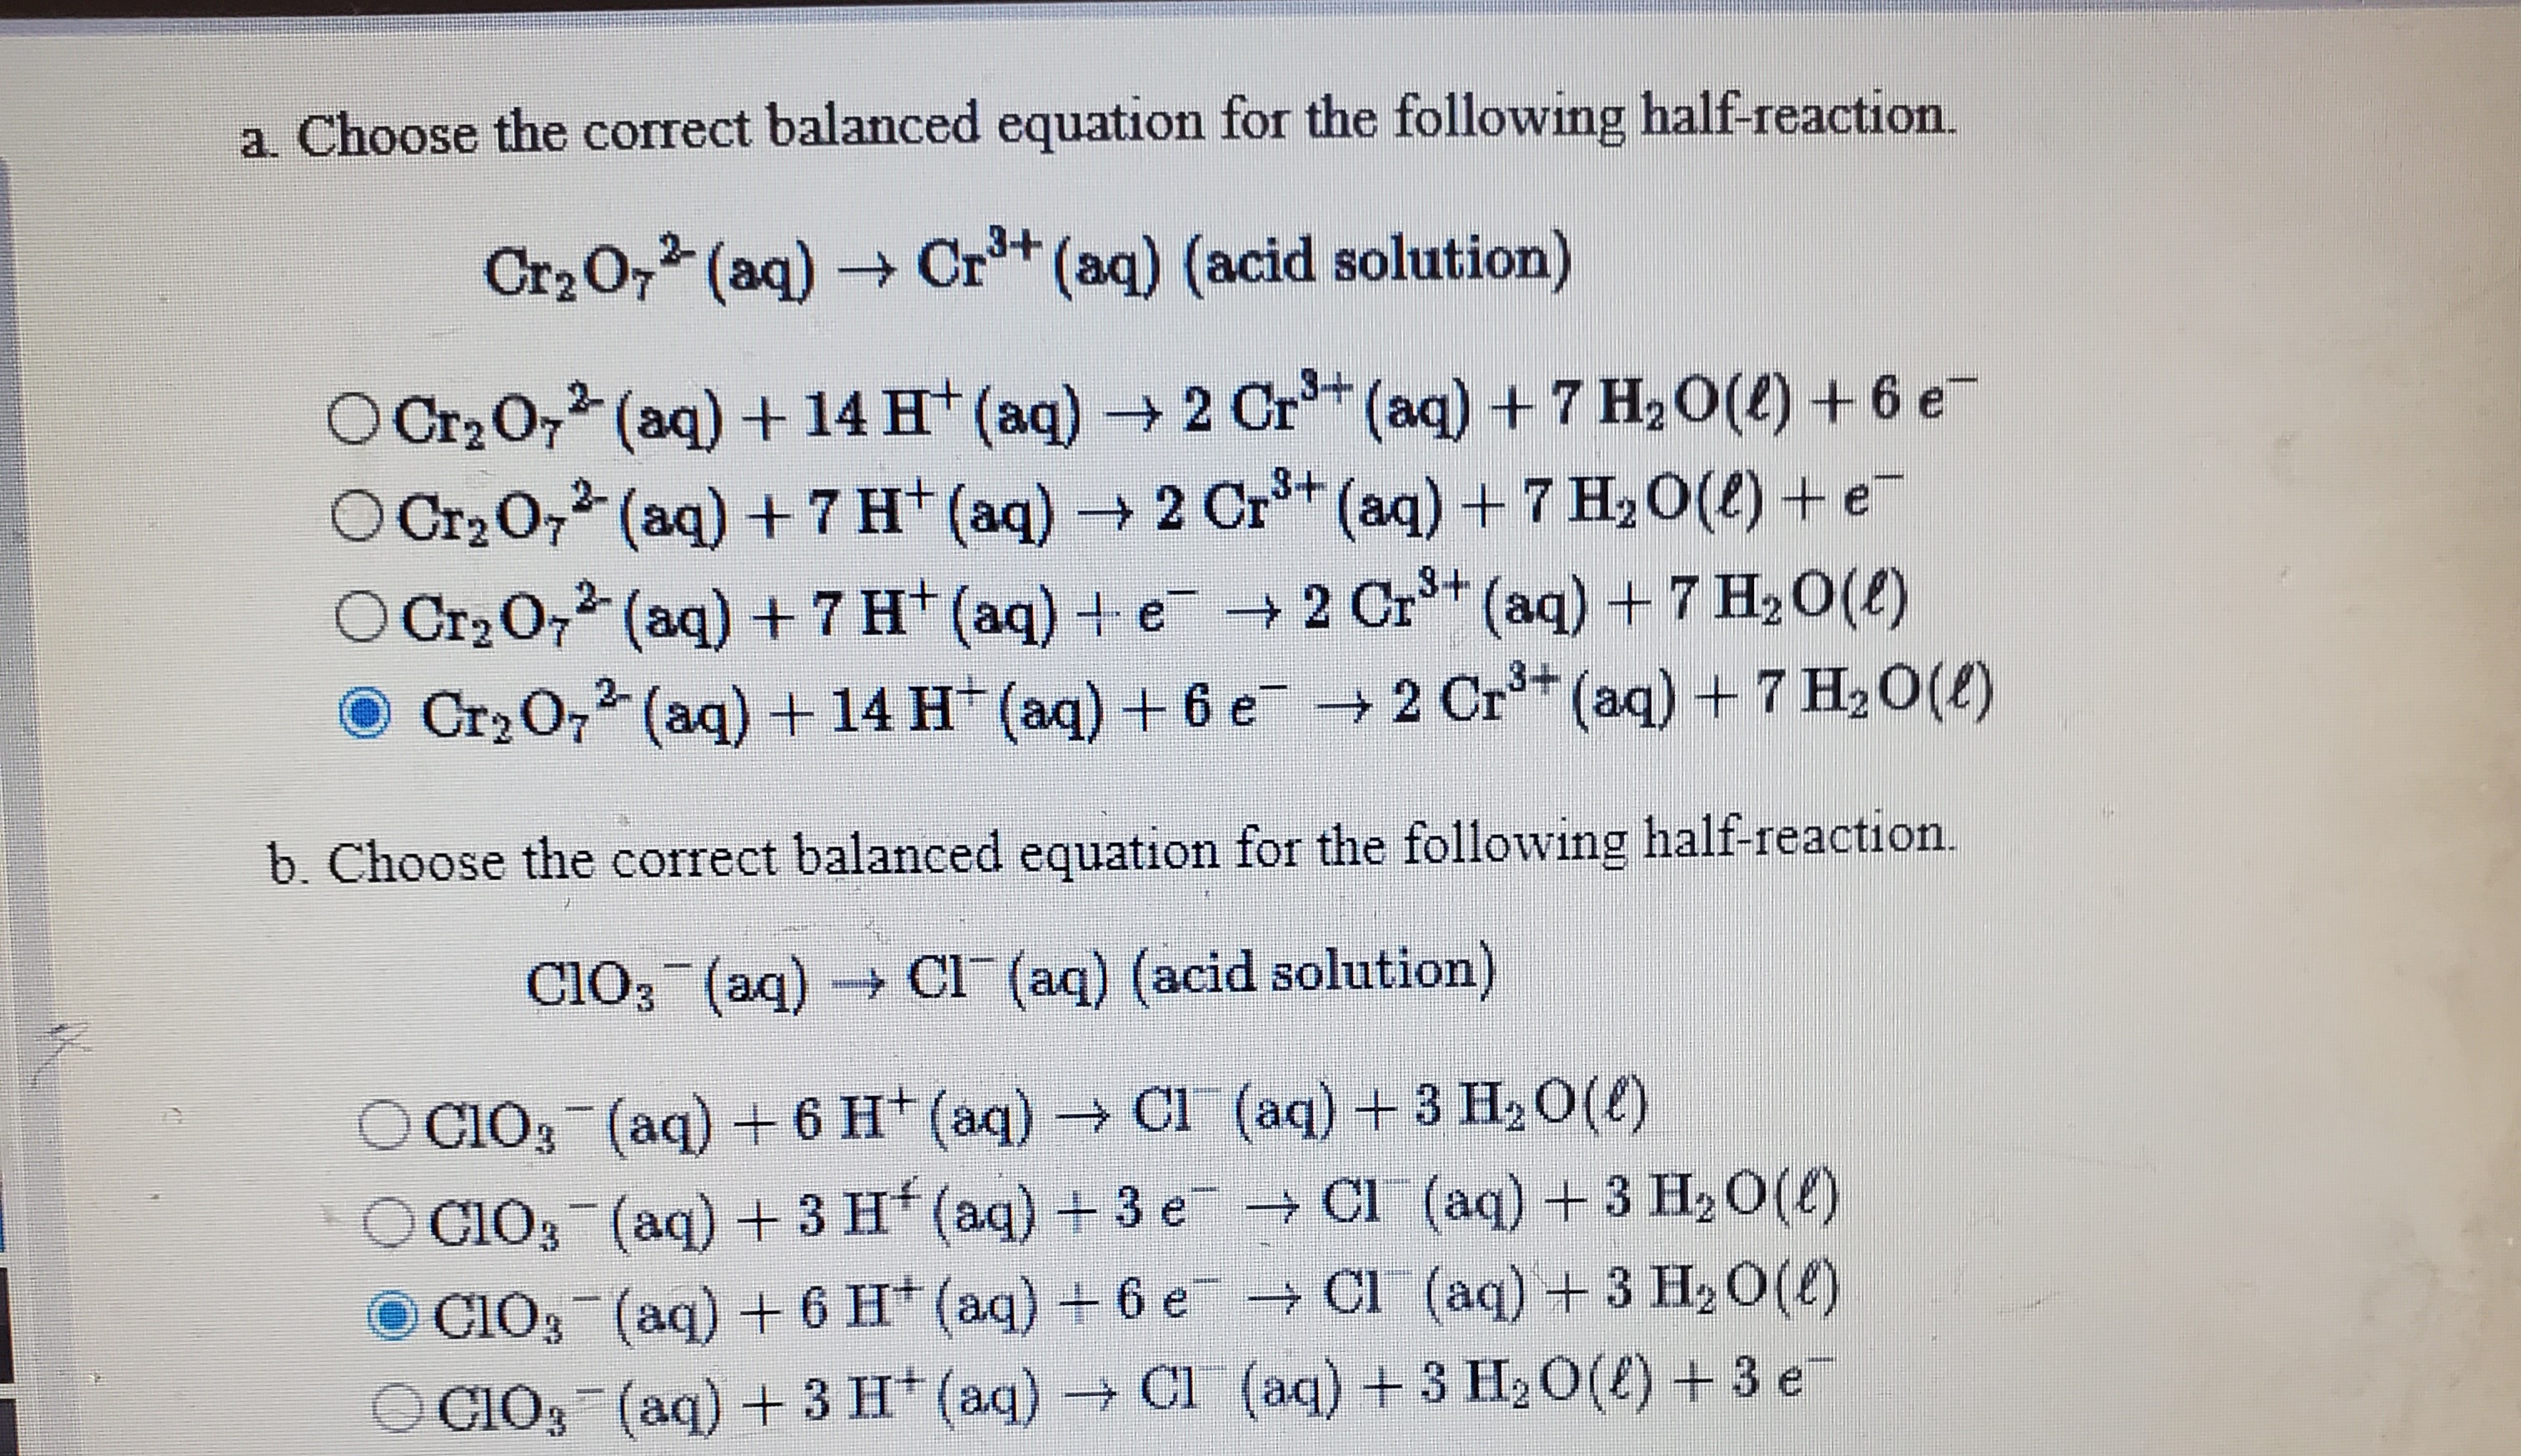 a. Choose the correct balanced equation for the following half-reaction.
Cr2 O, (aq) Cr+ (aq) (acid solution)
O Cr2 O7 (aq) + 14 H* (aq) 2 Cr (aq) + 7 H,O(l) + 6 e-
O Cr2 O, (aq) +7 H (aq) 2 Cr+ (aq)+ 7 H20(2) +e-
OCr20, (aq) +7 H+(aq) + e + 2 Cr+ (aq) +7 H20(2)
Cr2 07 (aq) + 14 H (aq) + 6 e 2 Cr (aq) +7 H20(e)
